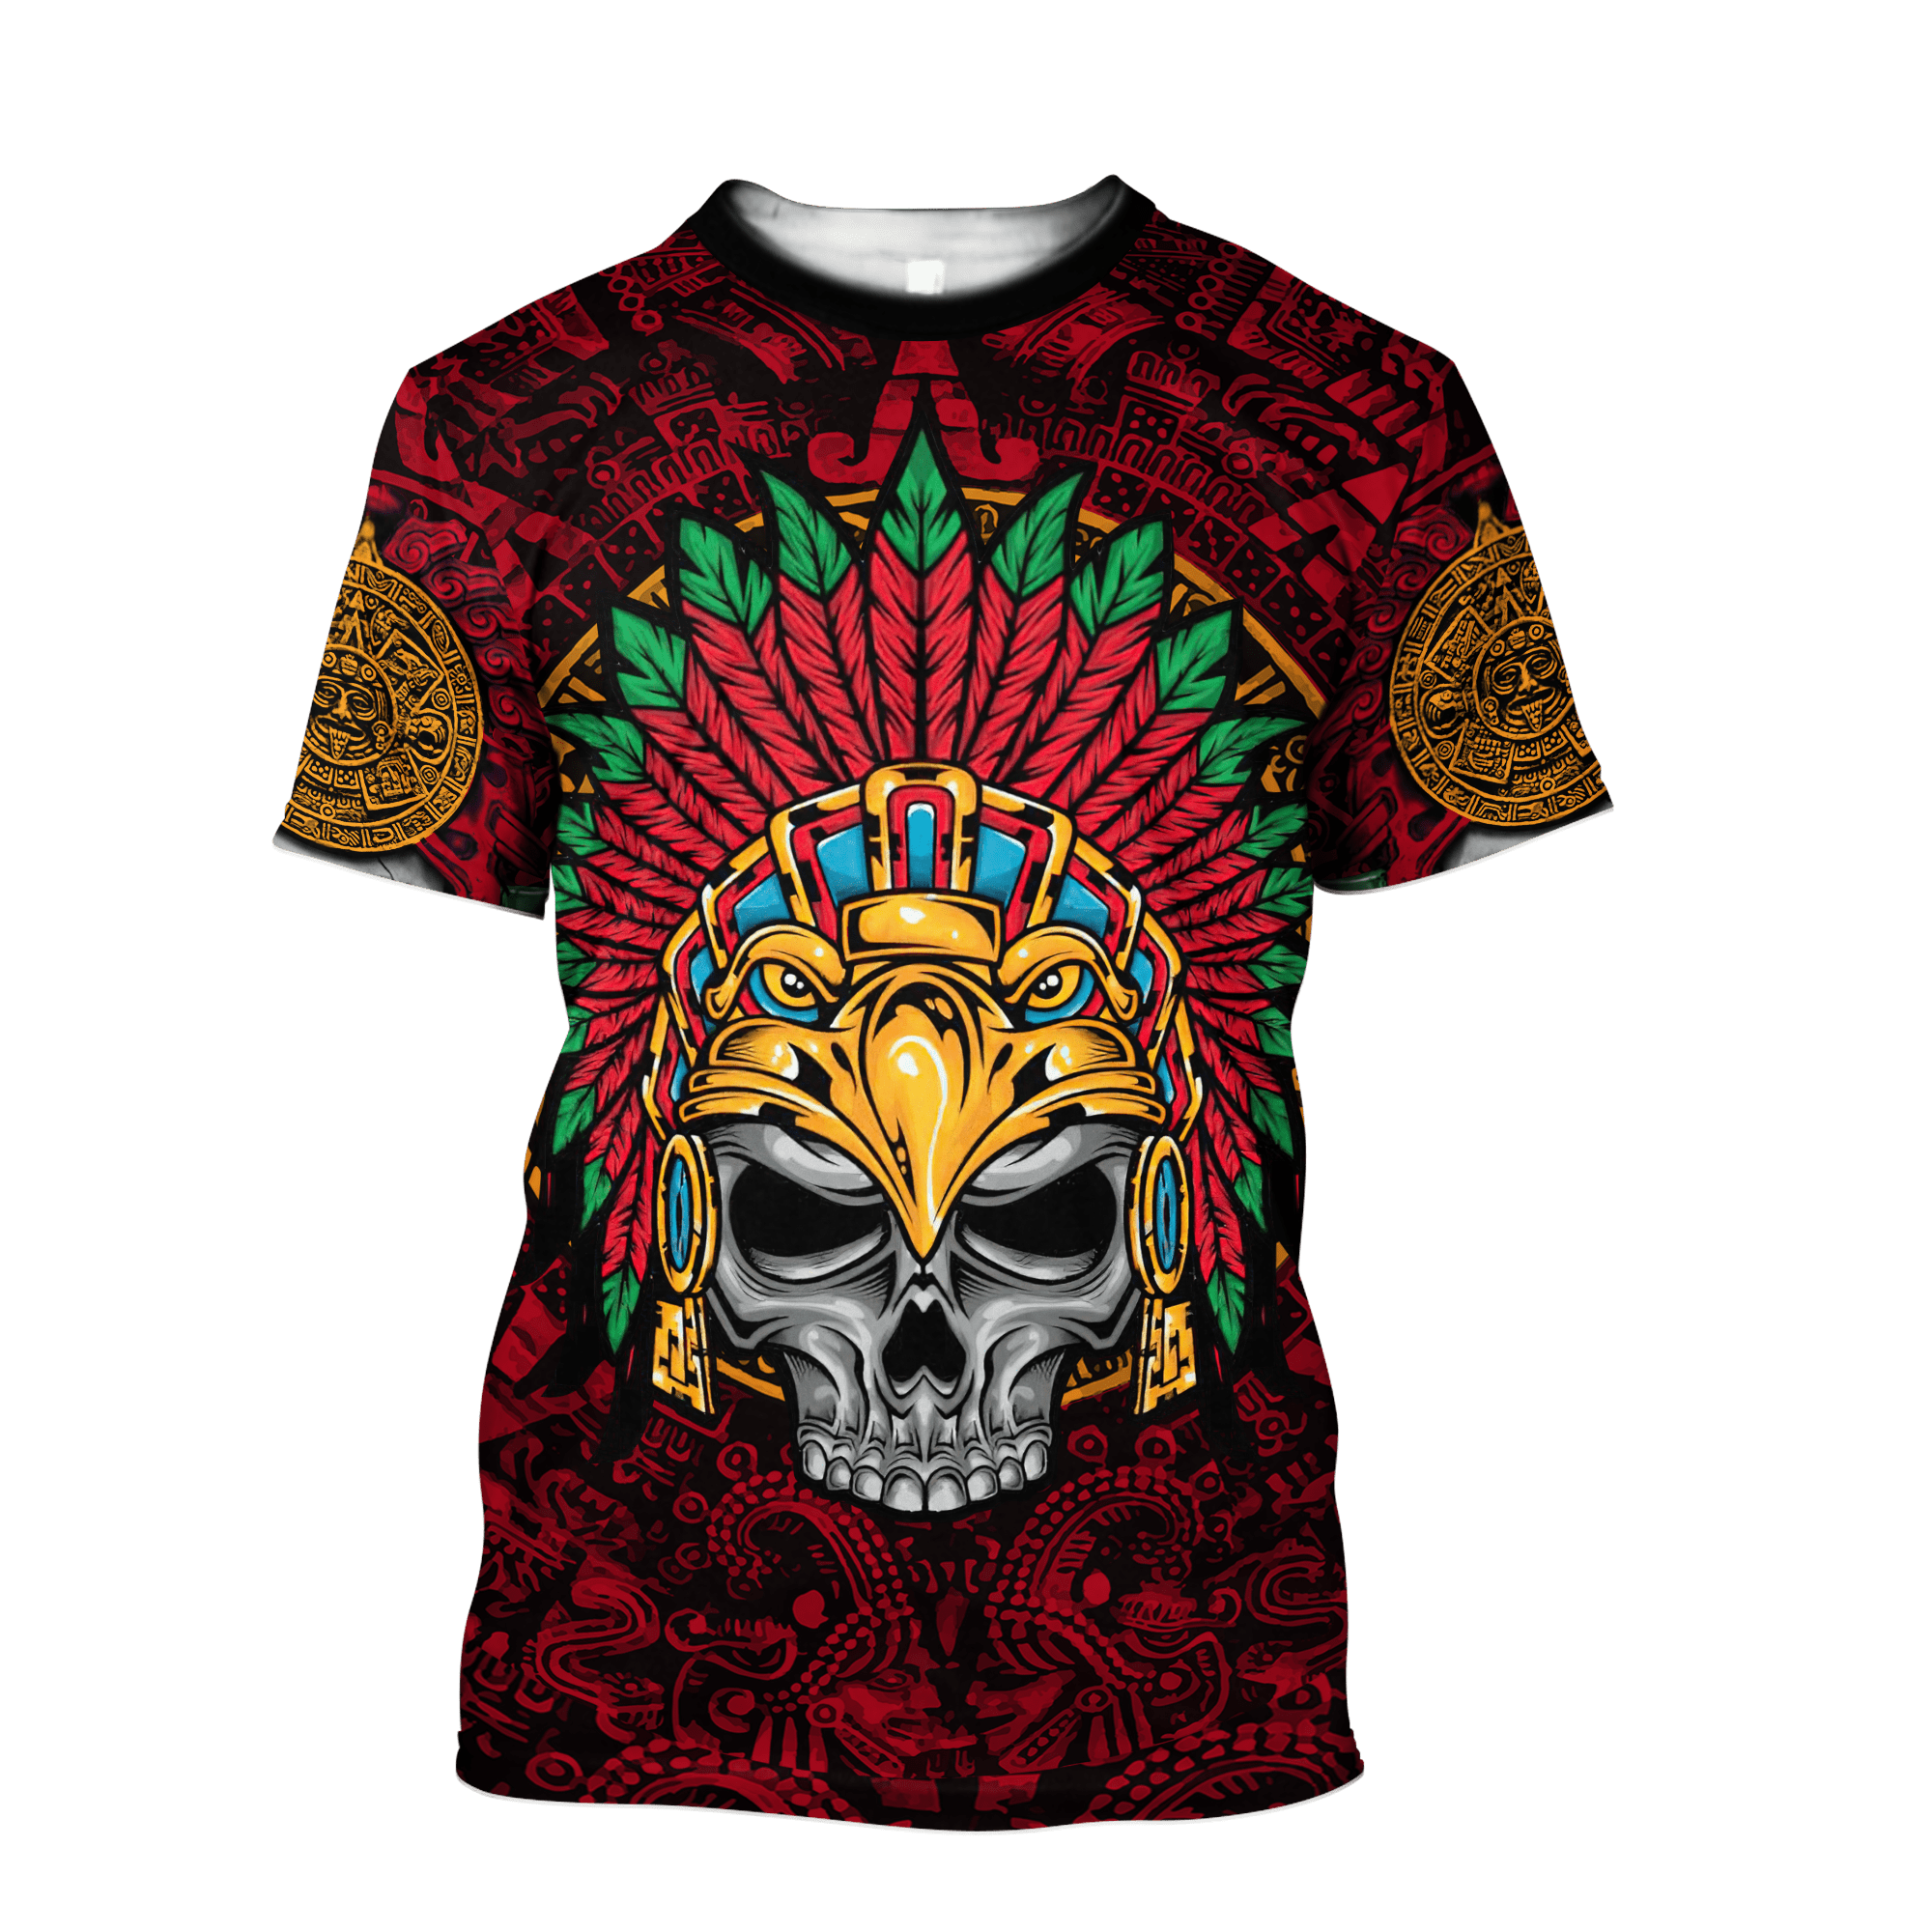 Coolspod Aztec Eagle Warrior Skull All Over Printed Combo T-Shirt/ Skull Mexico T-Shirt